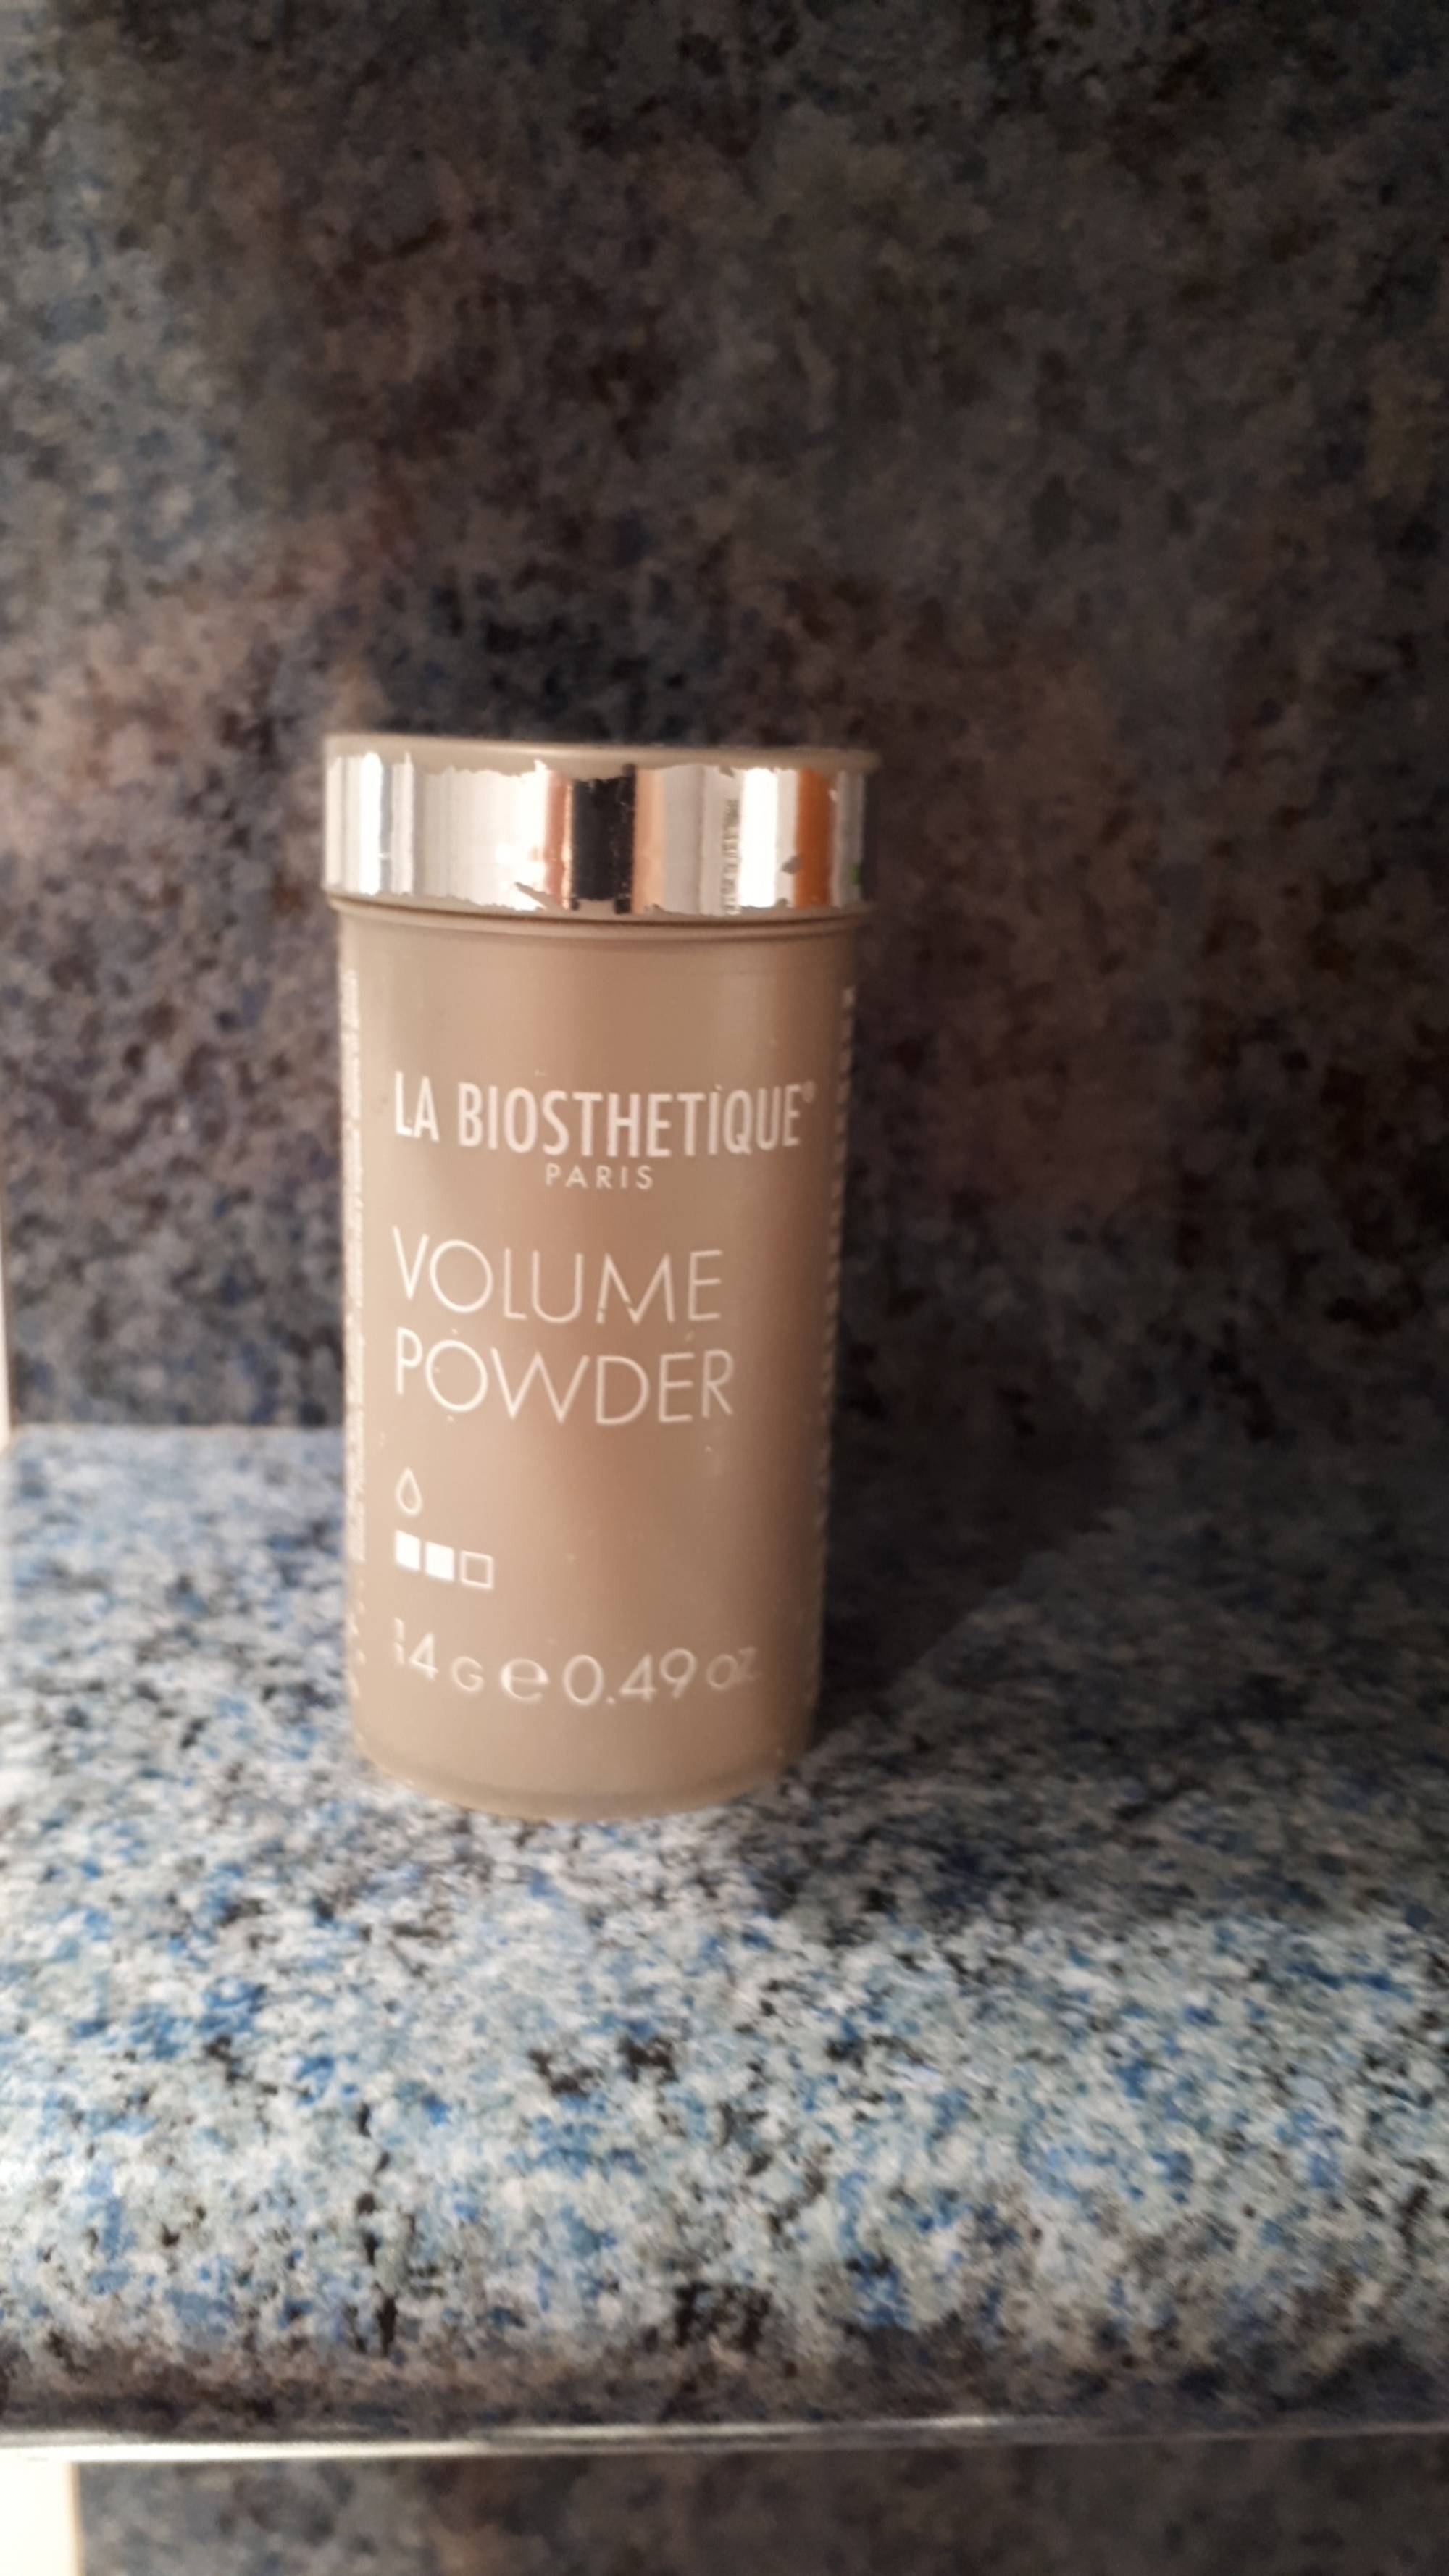 LA BIOSTHETIQUE - Volume powder